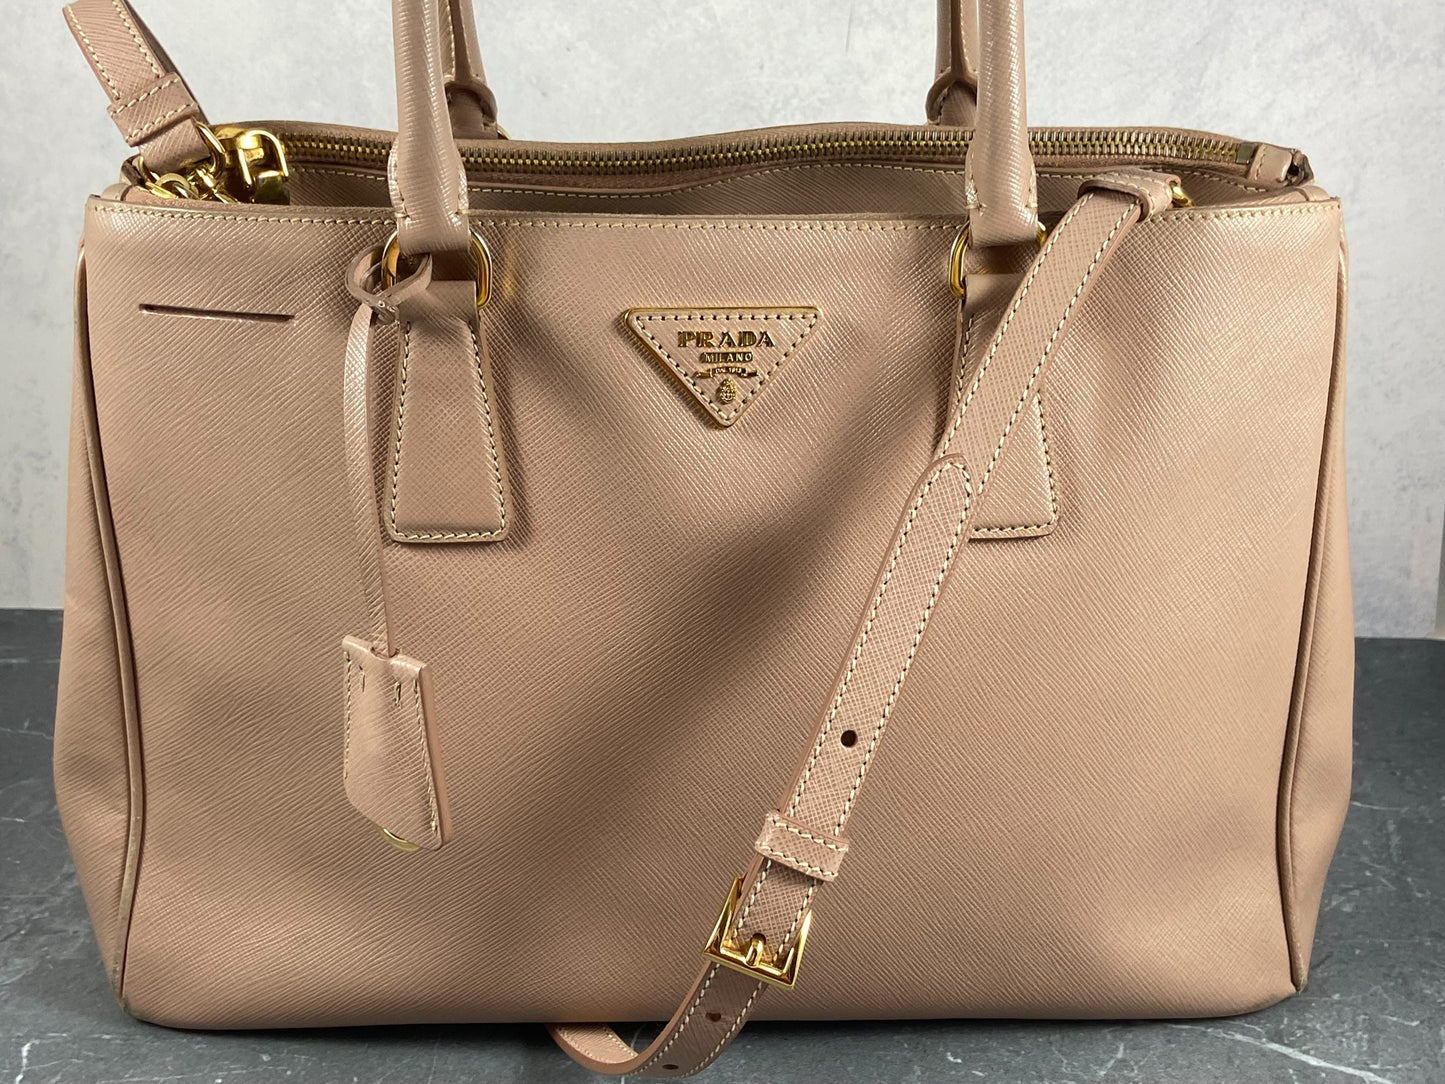 Prada Galleria Hand Bag Beige Saffiano Leather